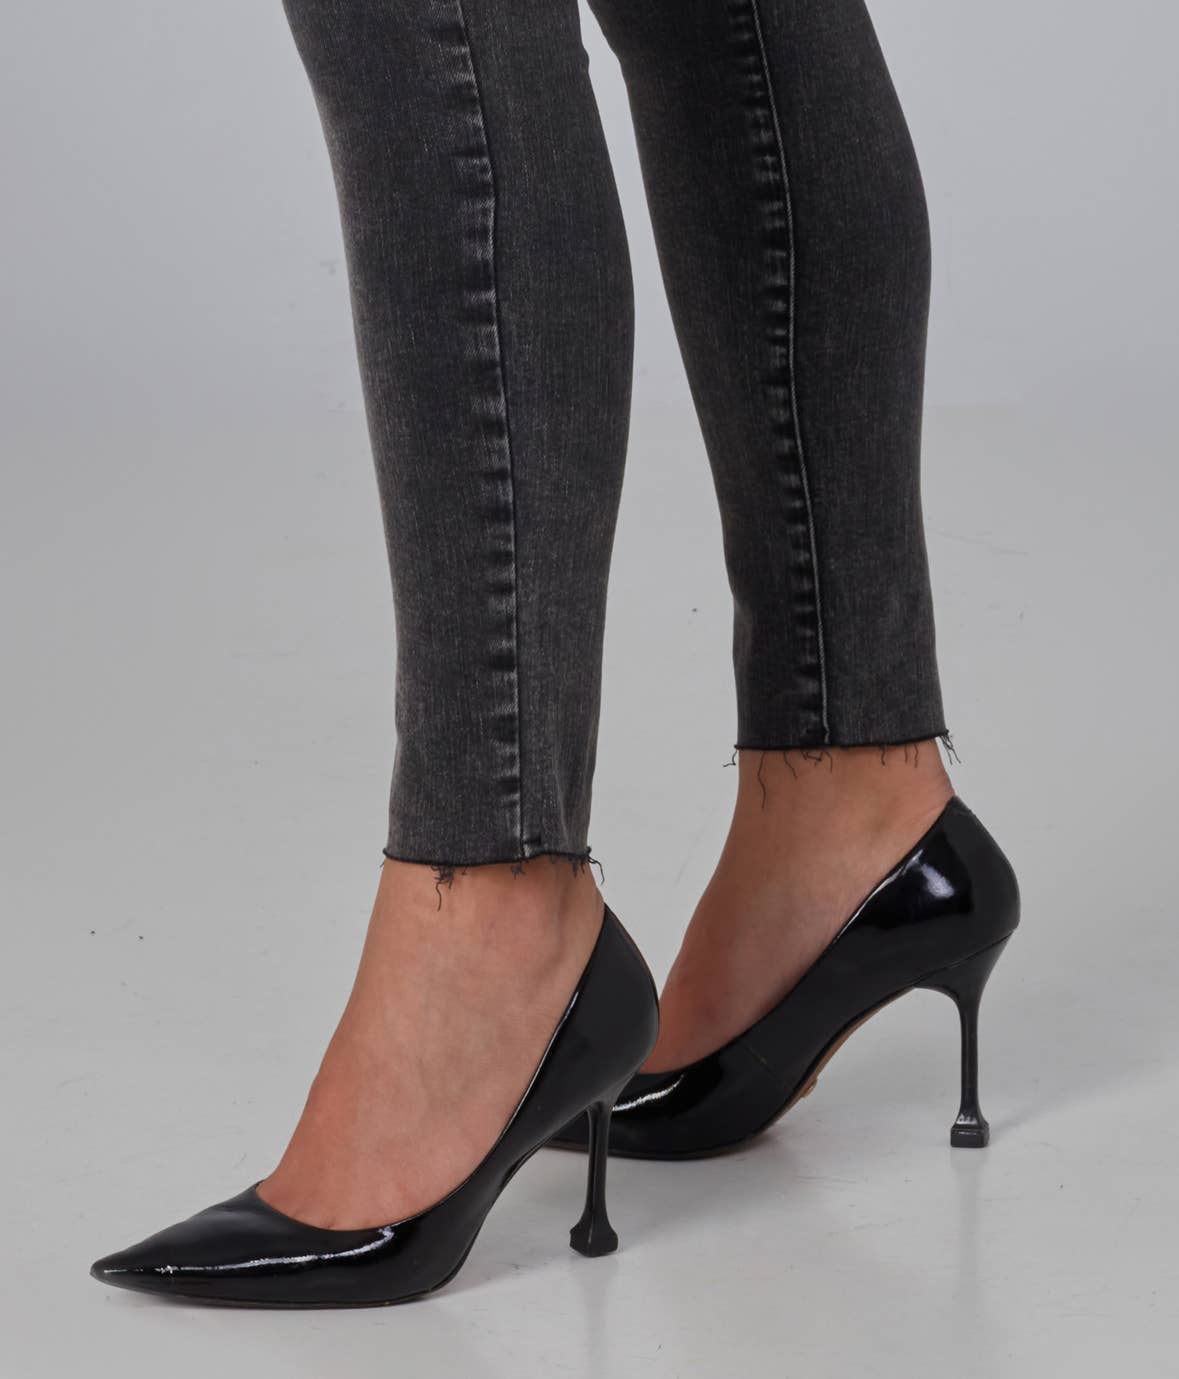 Alexa High Rise Skinny Jeans - Smokey Grey